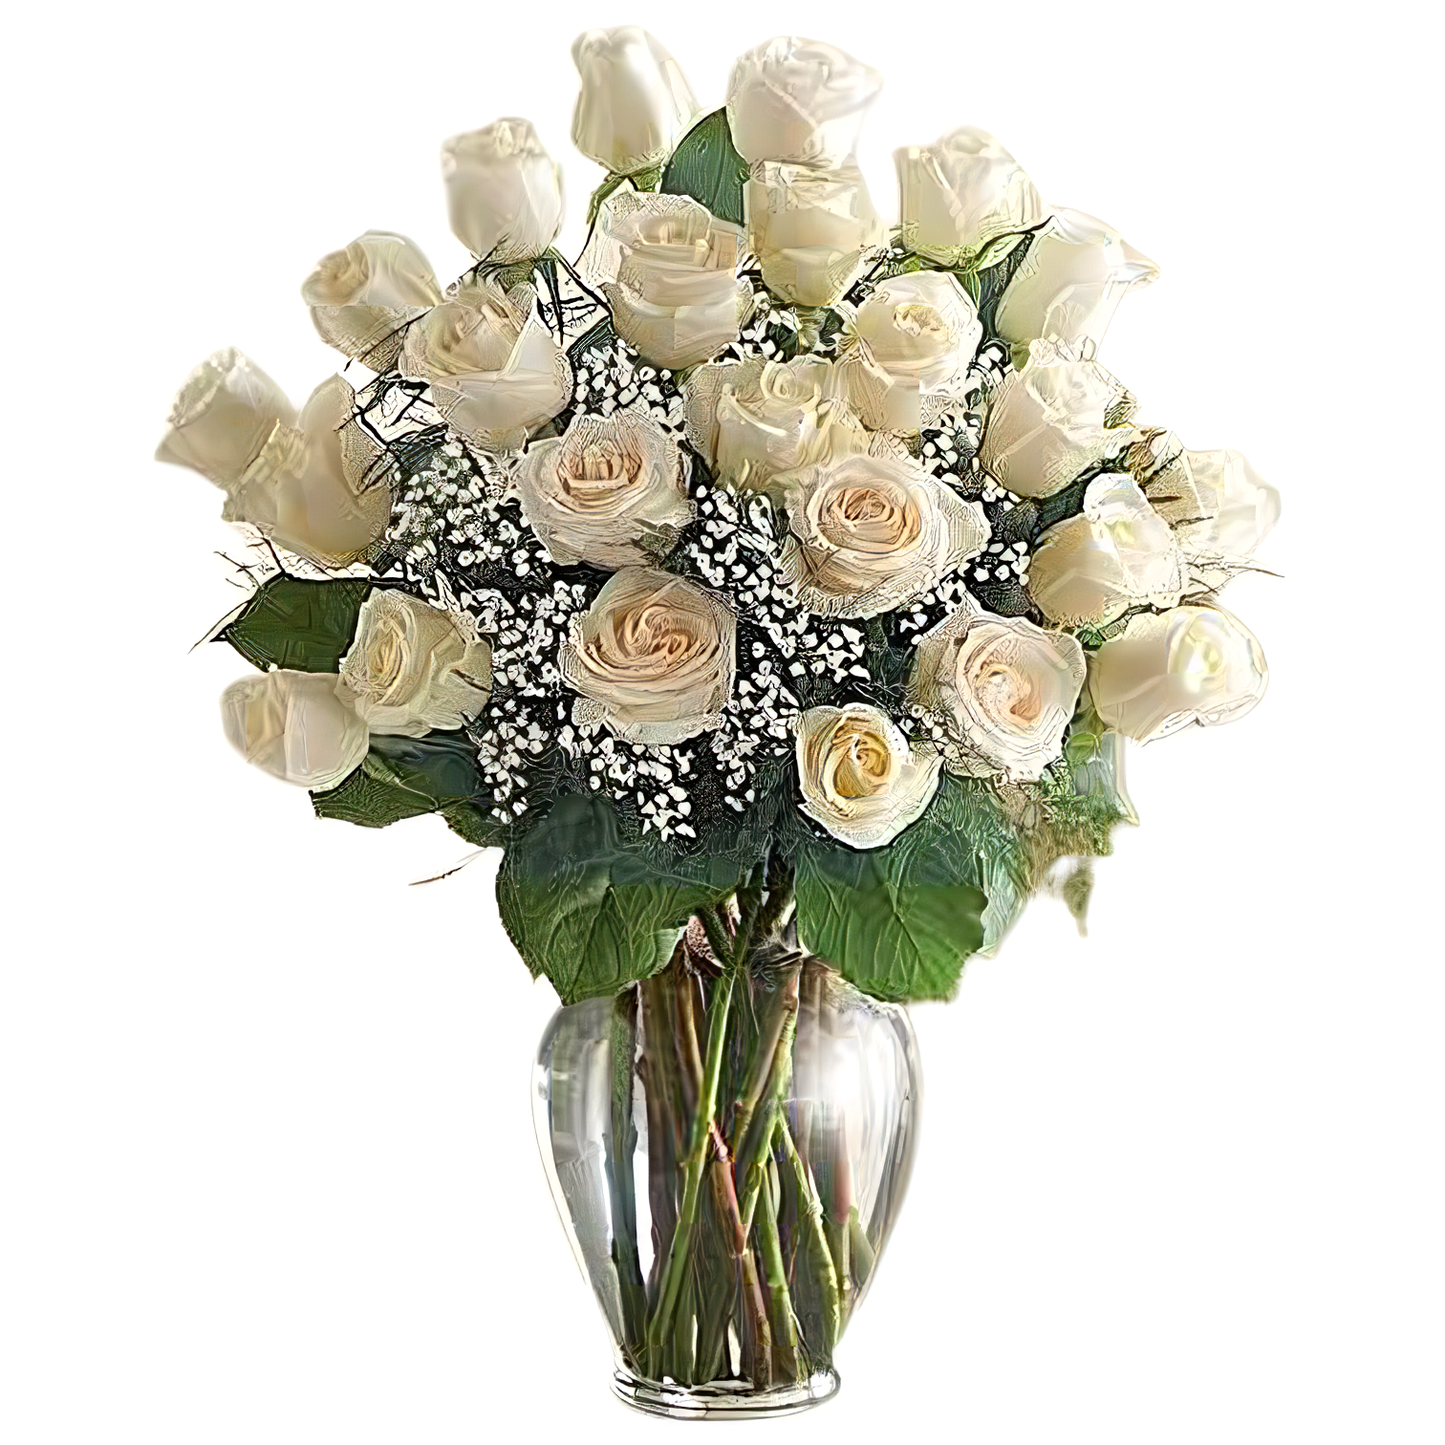 NYC Flower Delivery - Premium Long Stem White Roses for Sympathy - Funeral > Vase Arrangements